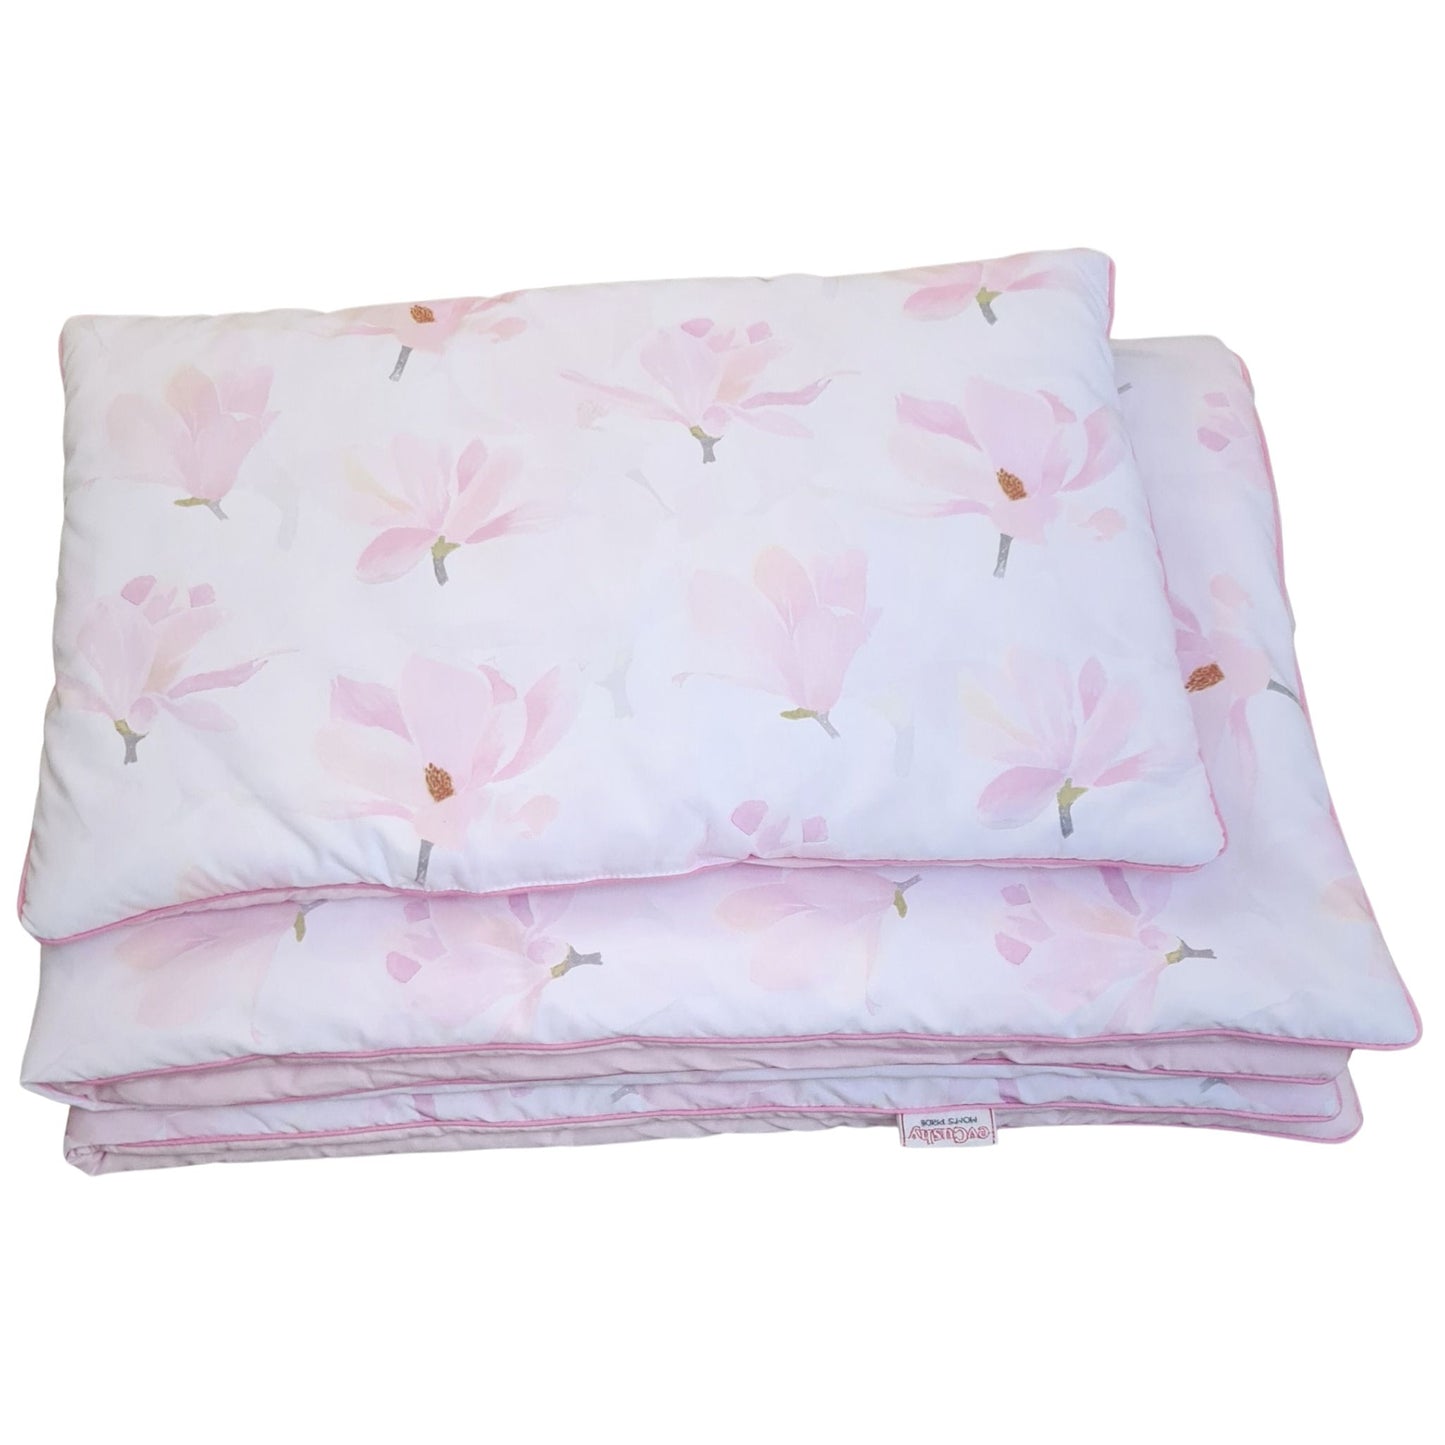 Children Quilt & Pillow Set- Bedding For Cot Bed - Magnolia Blossom